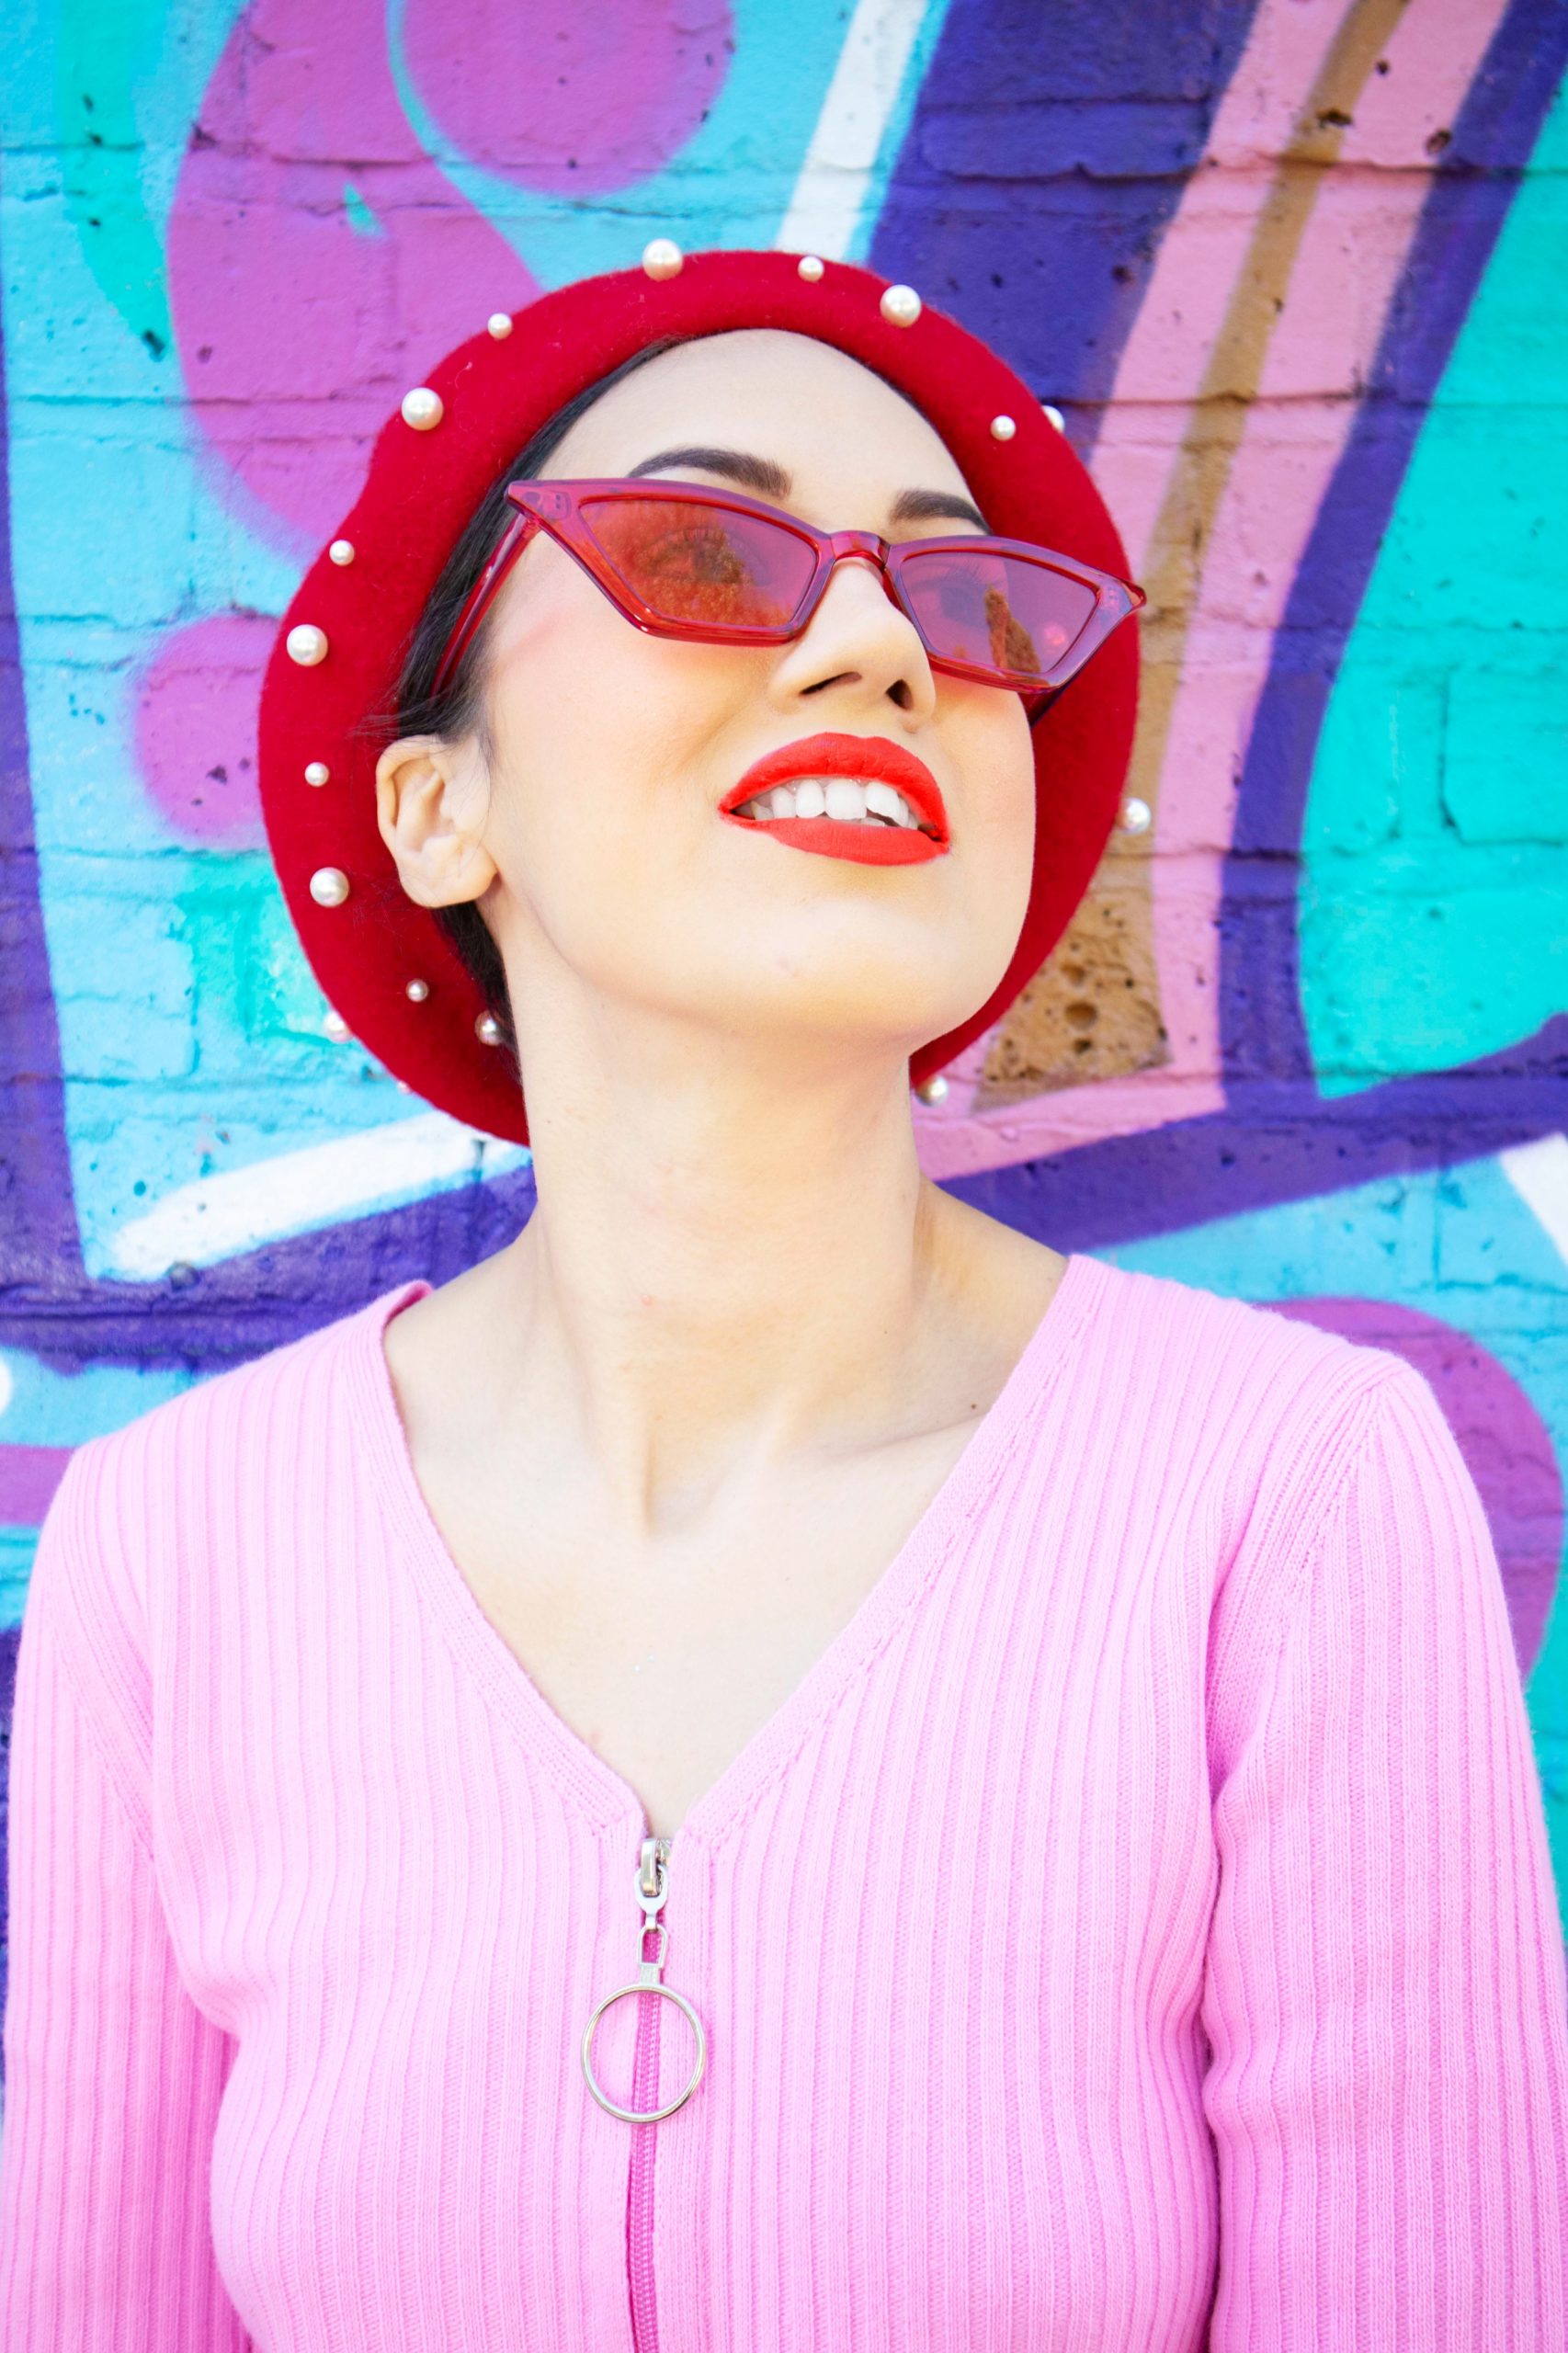 <img src="Ana.jpg" alt="Ana in red pearl beret and sunglasses"/> 